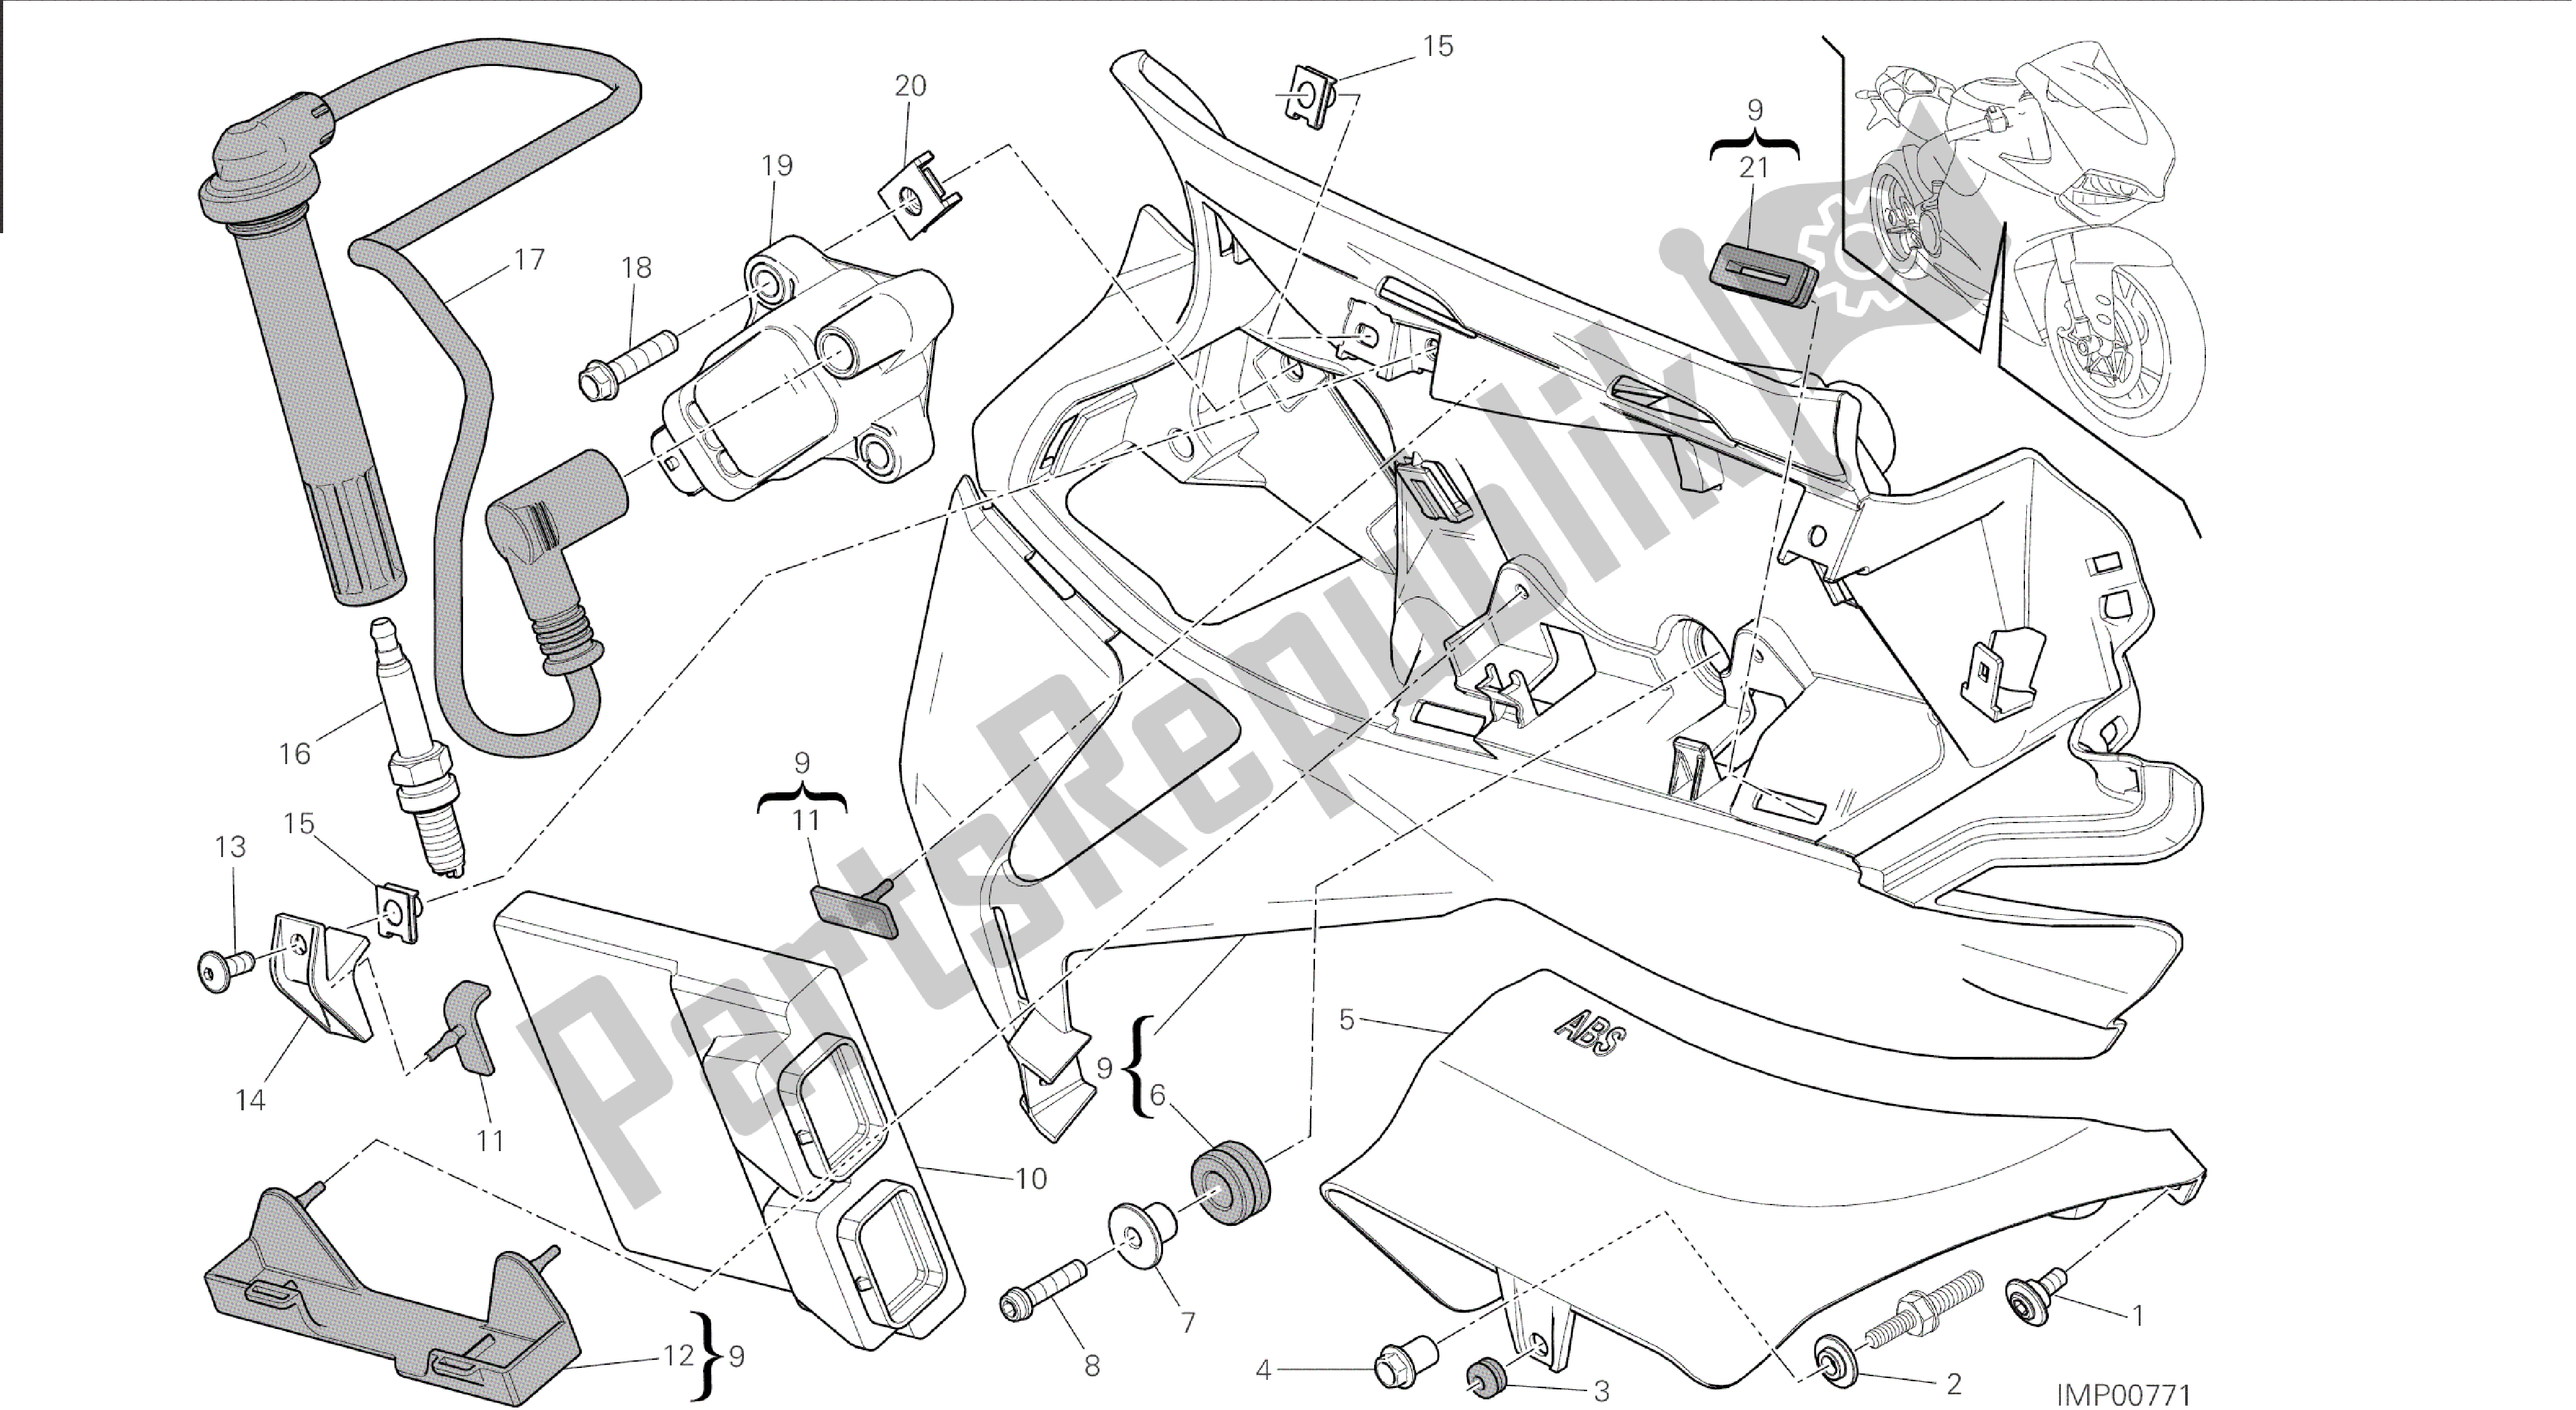 Alle onderdelen voor de Tekening 18b - Impianto Elettrico Destro [mod: 1199r; Xst: Aus, Eur, Fra, Jap, Twn] Groep Elektrisch van de Ducati Panigale 1198 2015